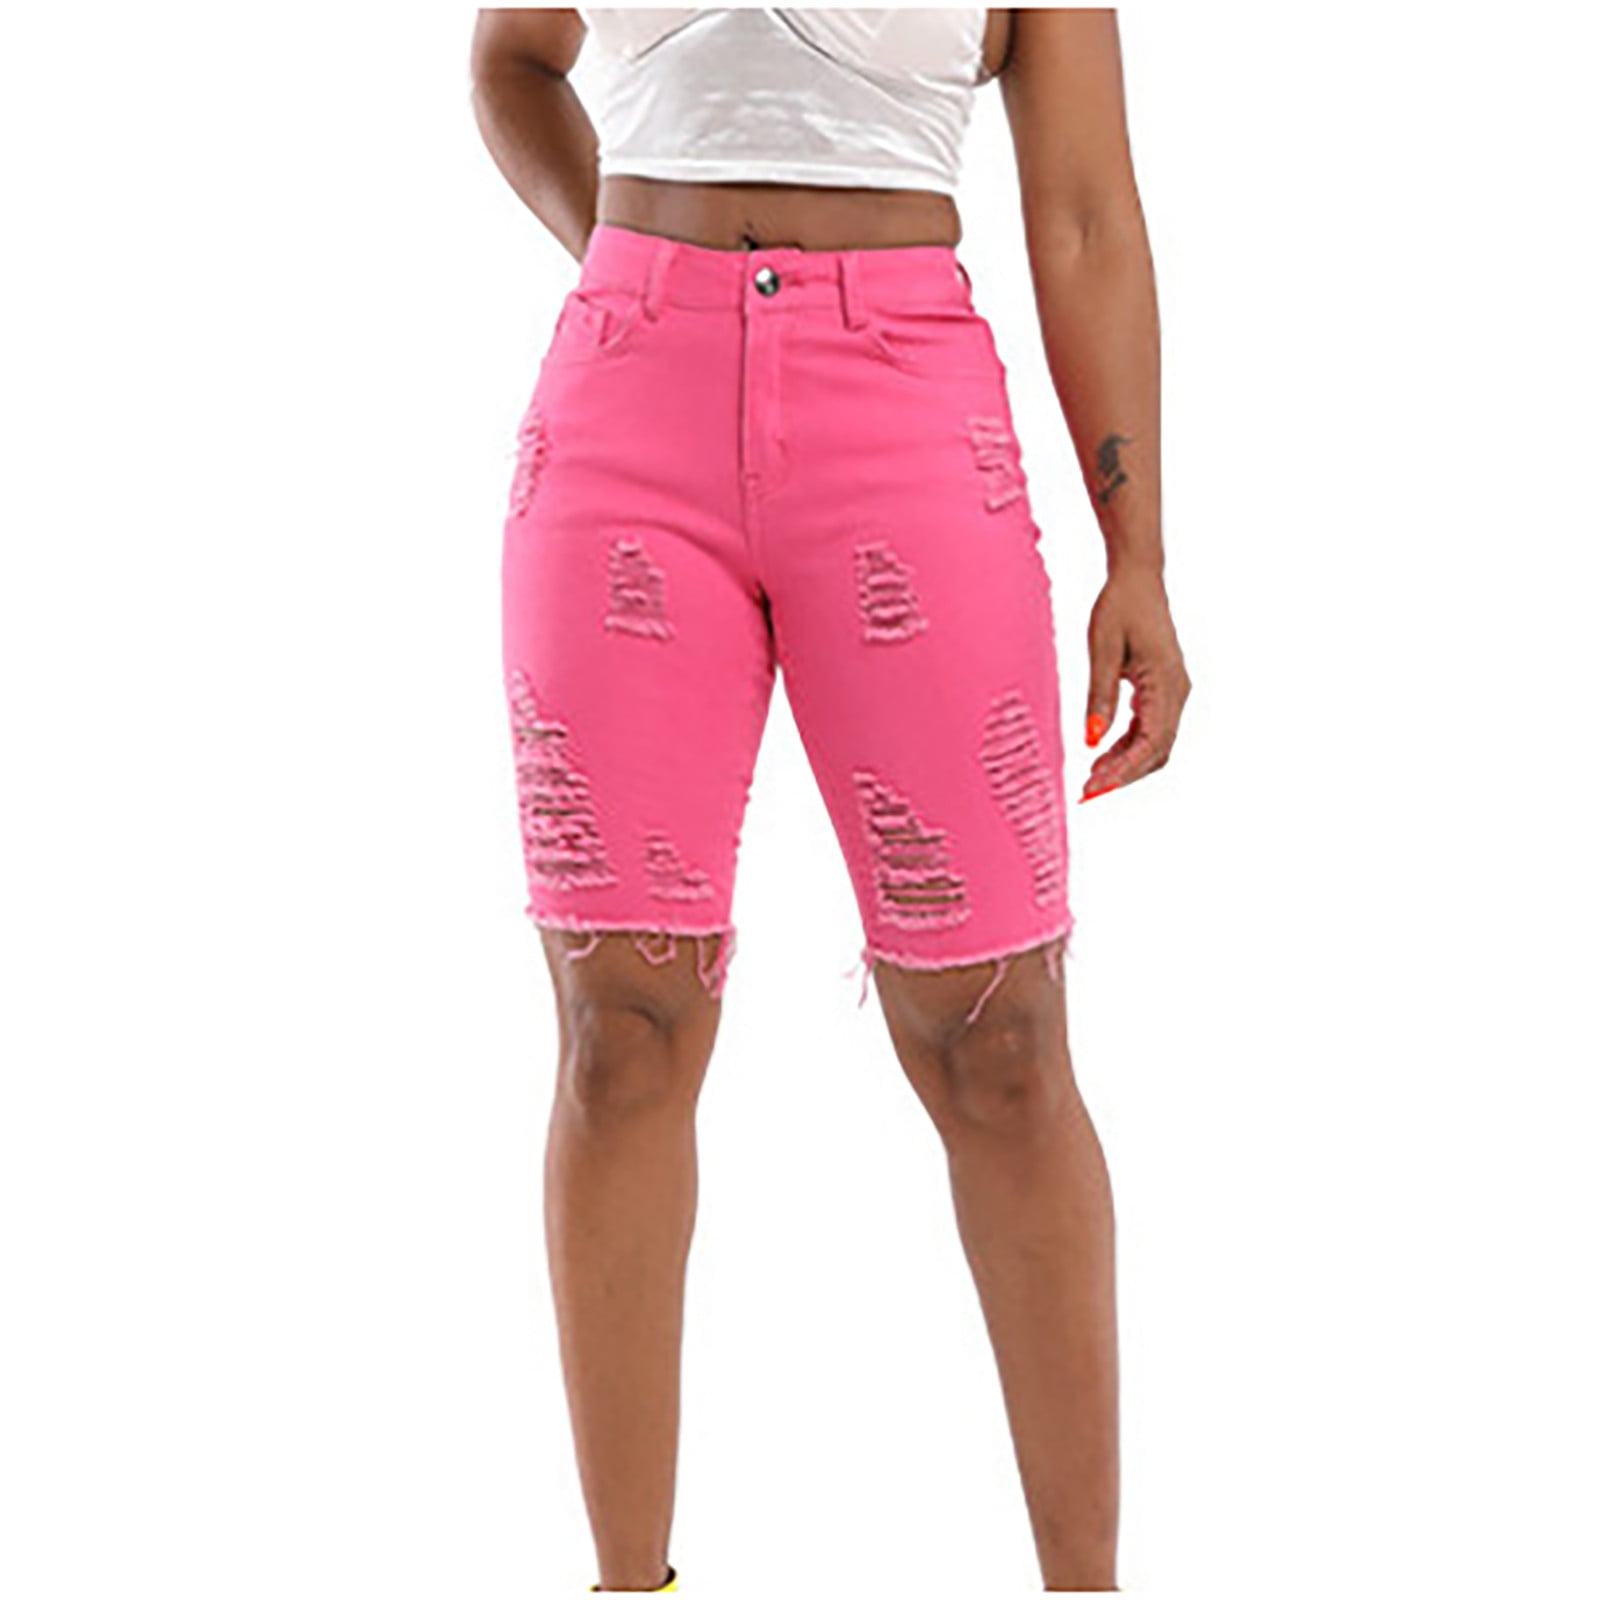 Finelylove Women'S Denim Shorts Shorts Under Dress For Women Jean High  Waist Rise Solid Pink XXL 